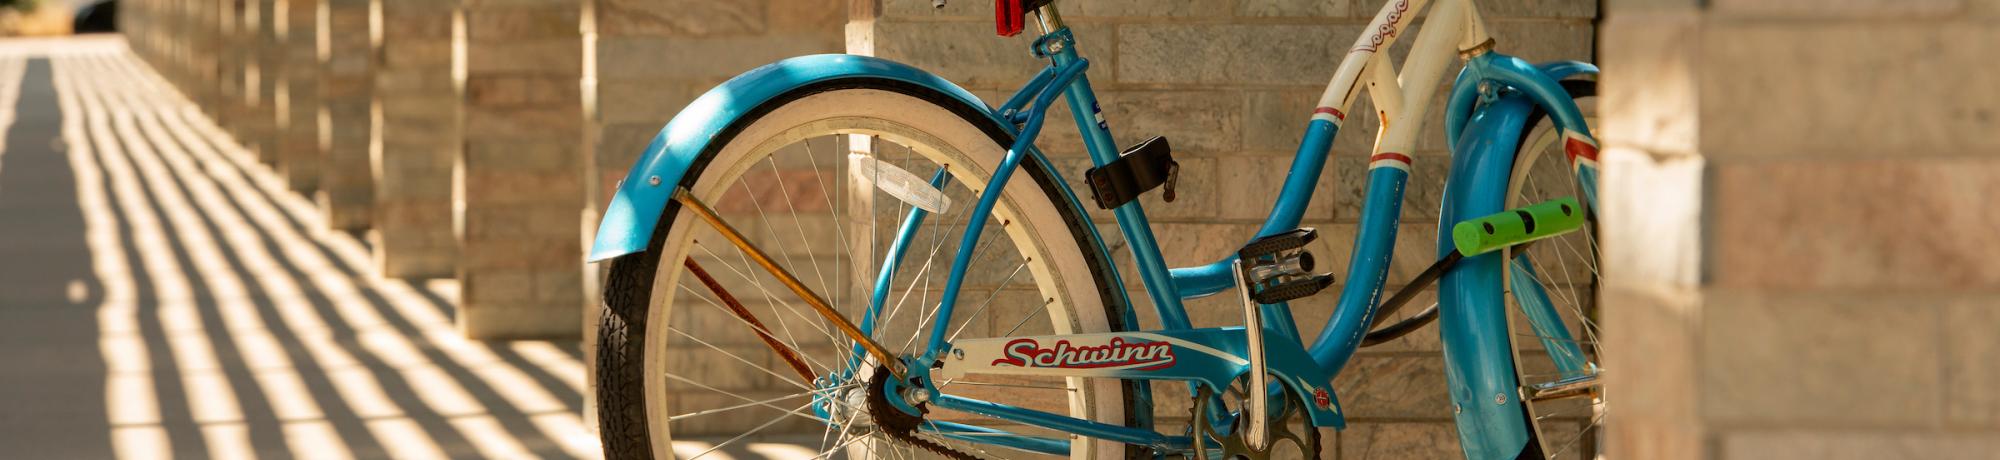 Blue bicycle in shadows near Shrem Museum